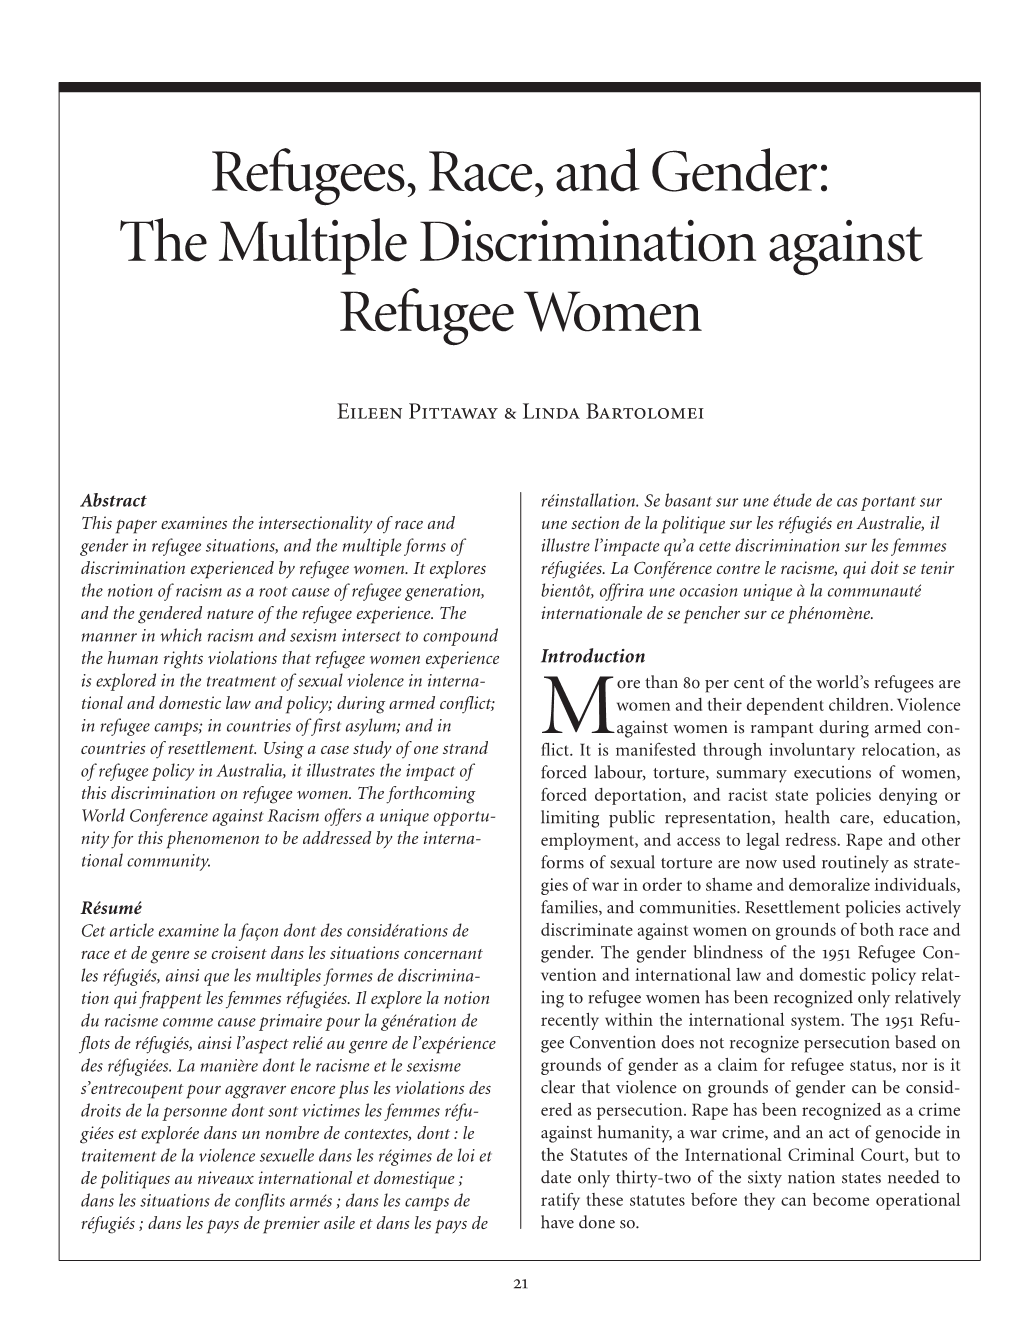 Refugees, Race, and Gender: the Multiple Discrimination Against Refugee Women